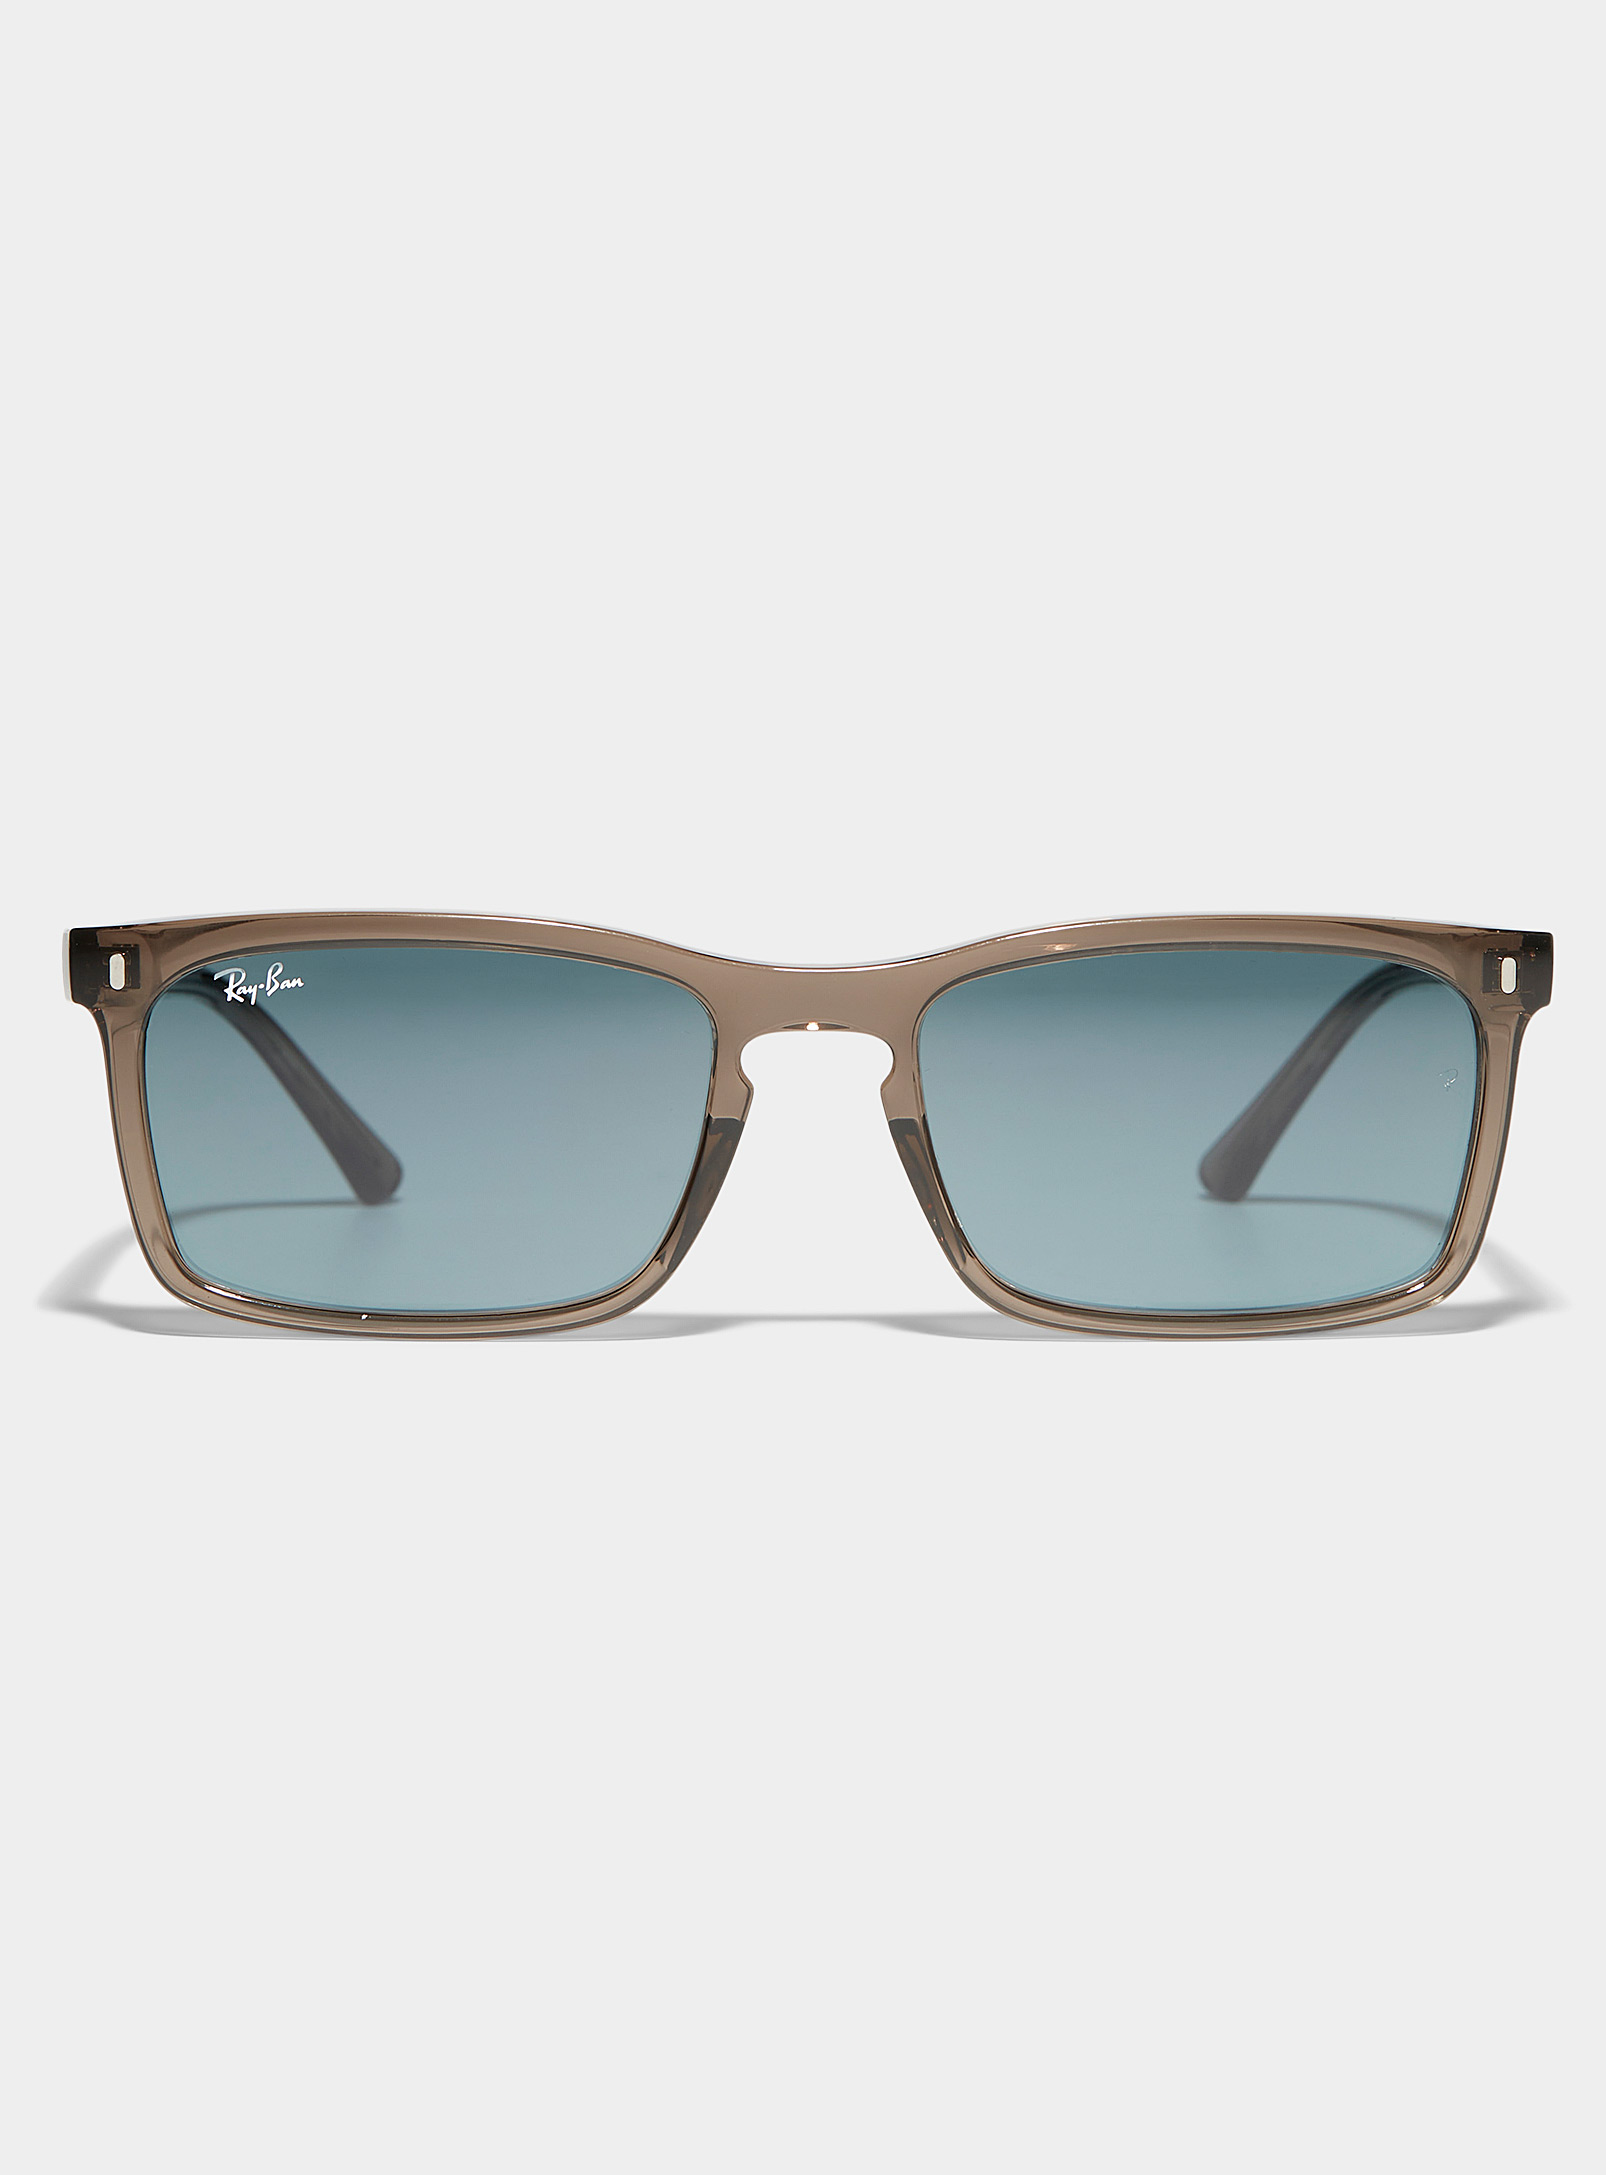 Ray-Ban - Men's Translucent brown rectangular sunglasses